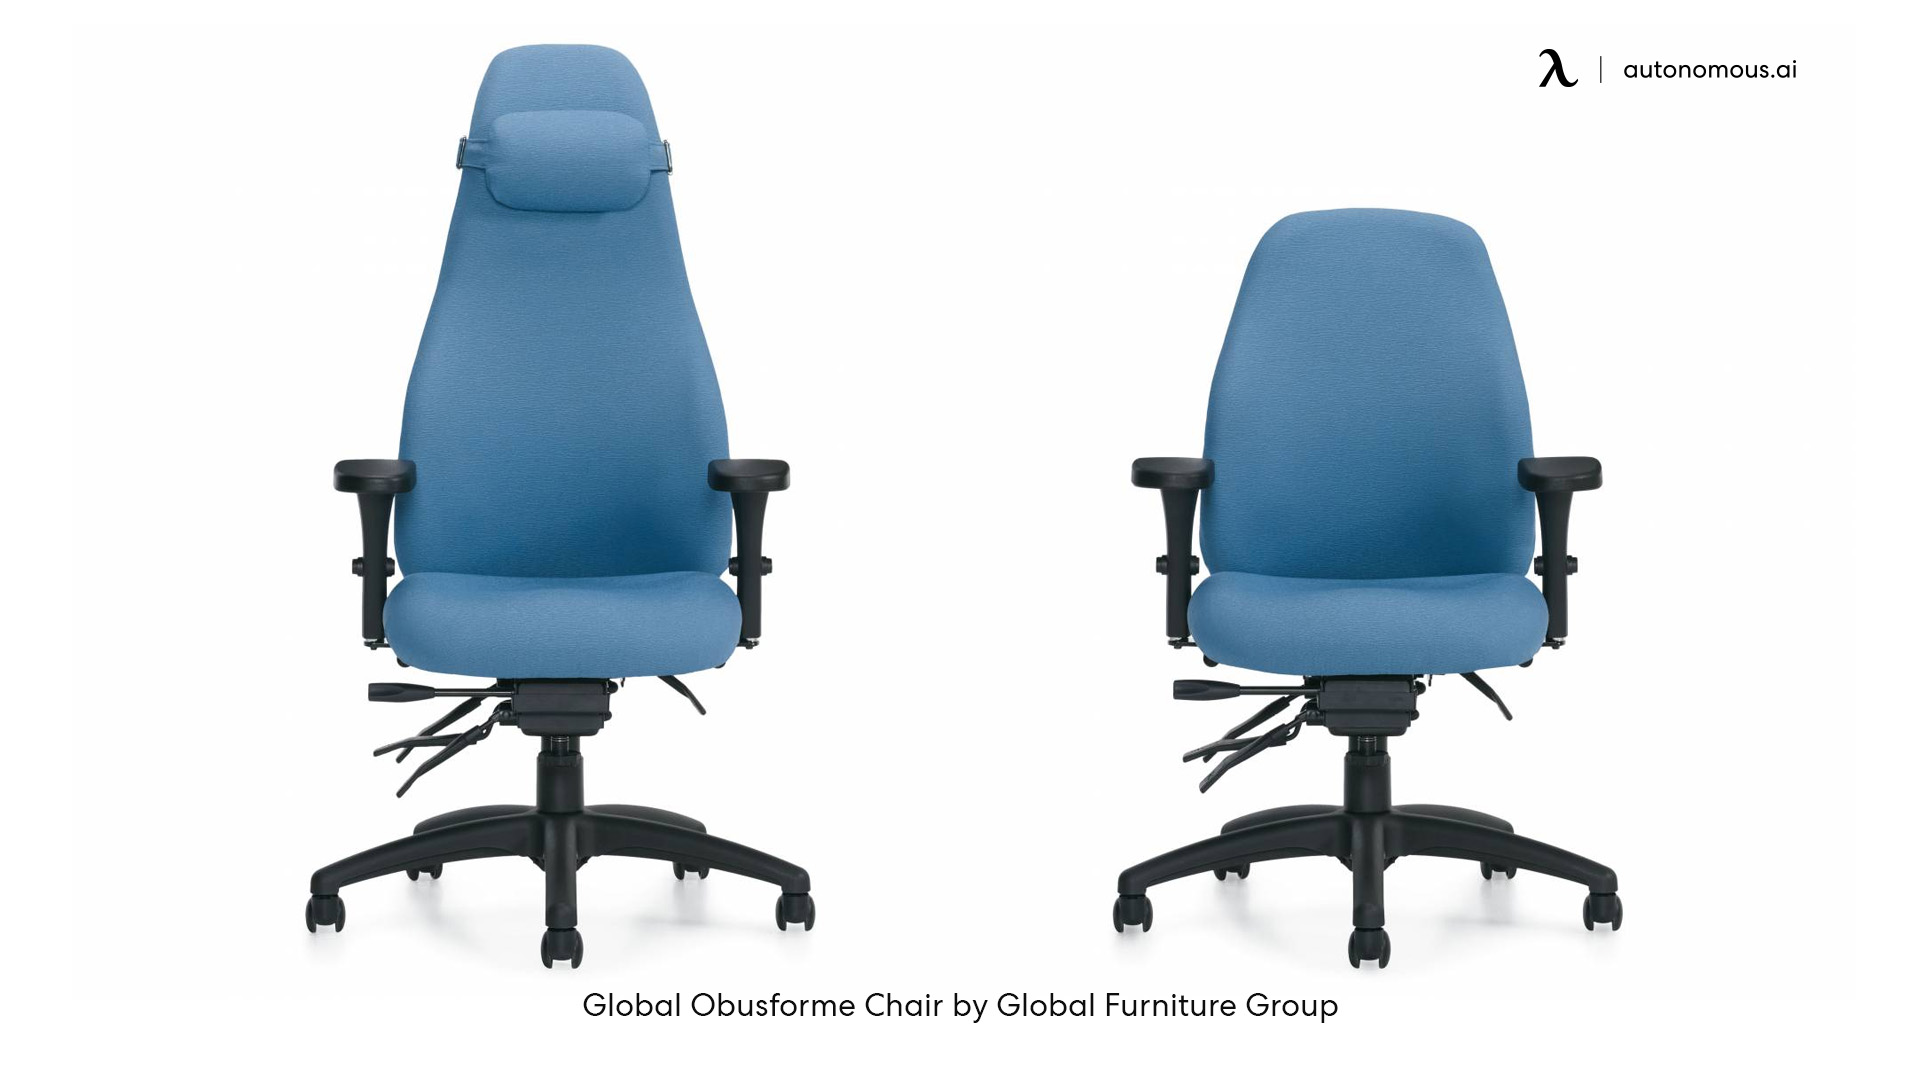 Global Obusforme Chair by Global Furniture Group